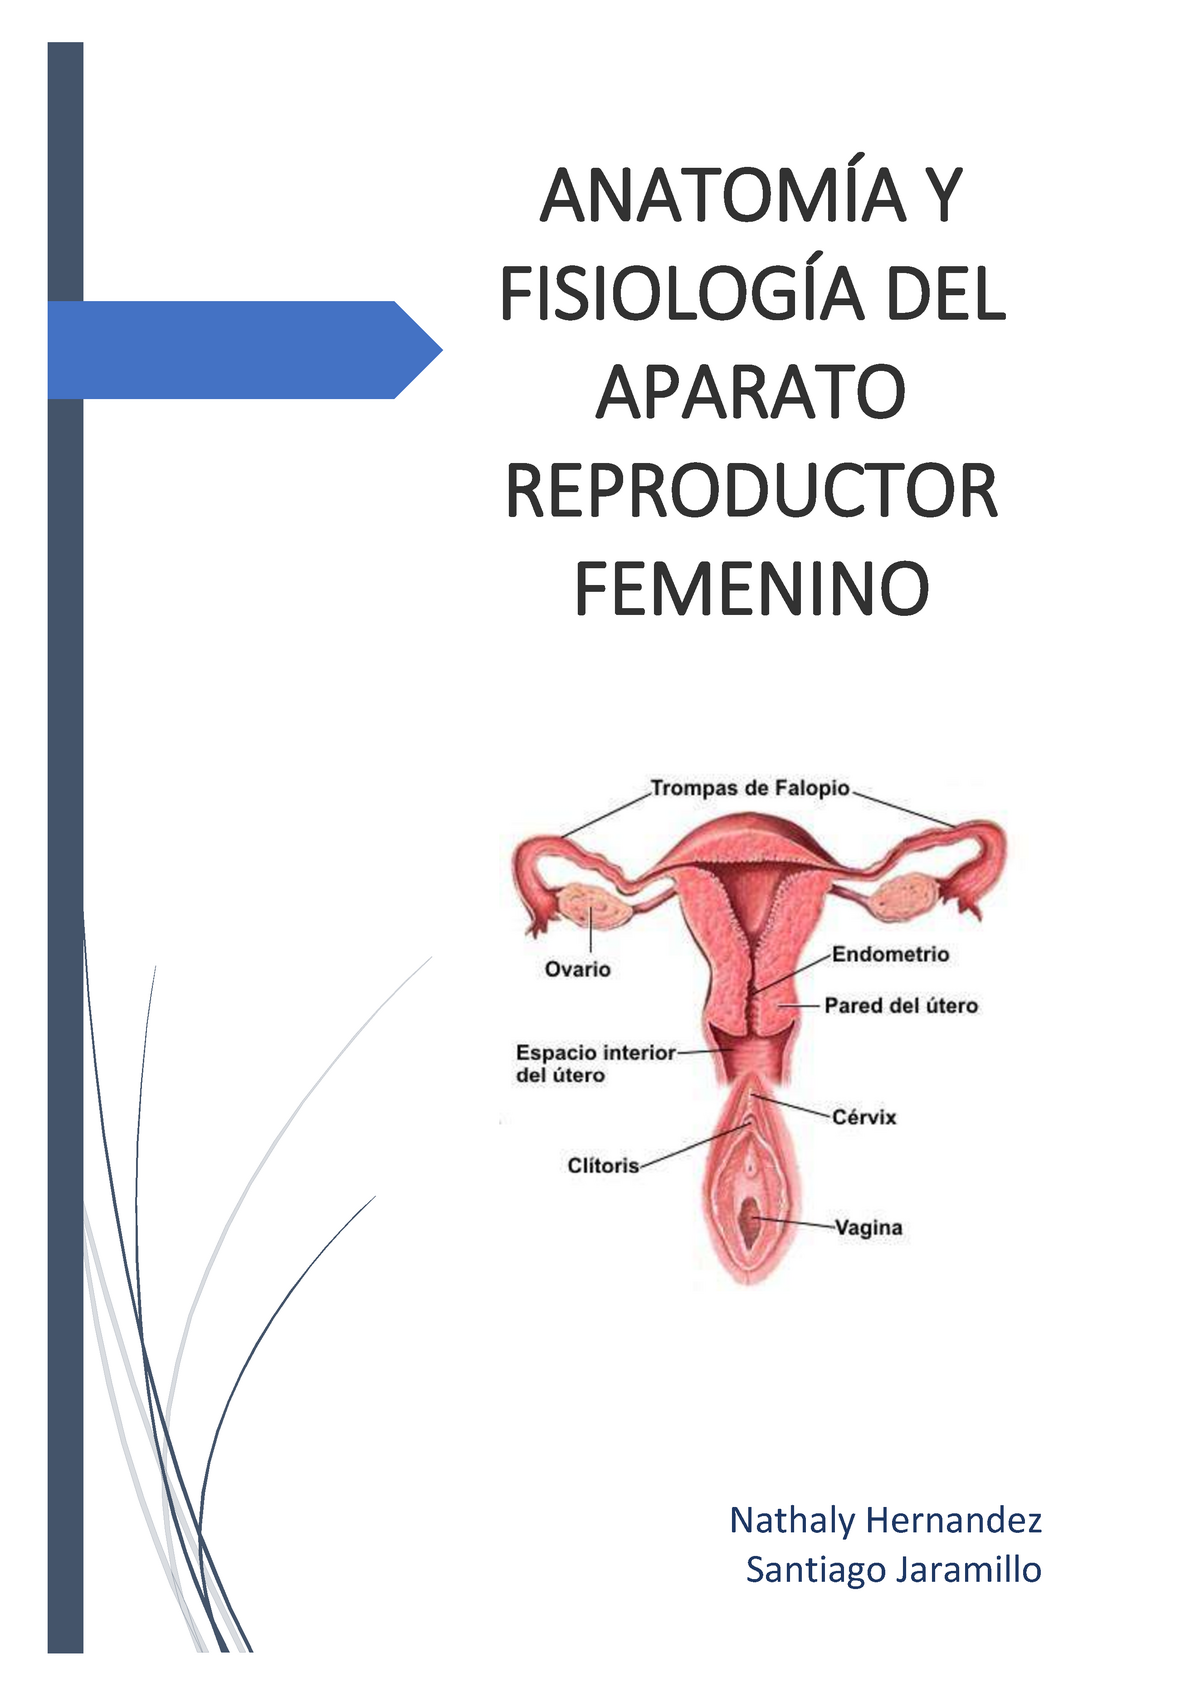 Pdf Anatomia Y Fisiologia Aparato Reproductor Anatomia Y Fisiologia